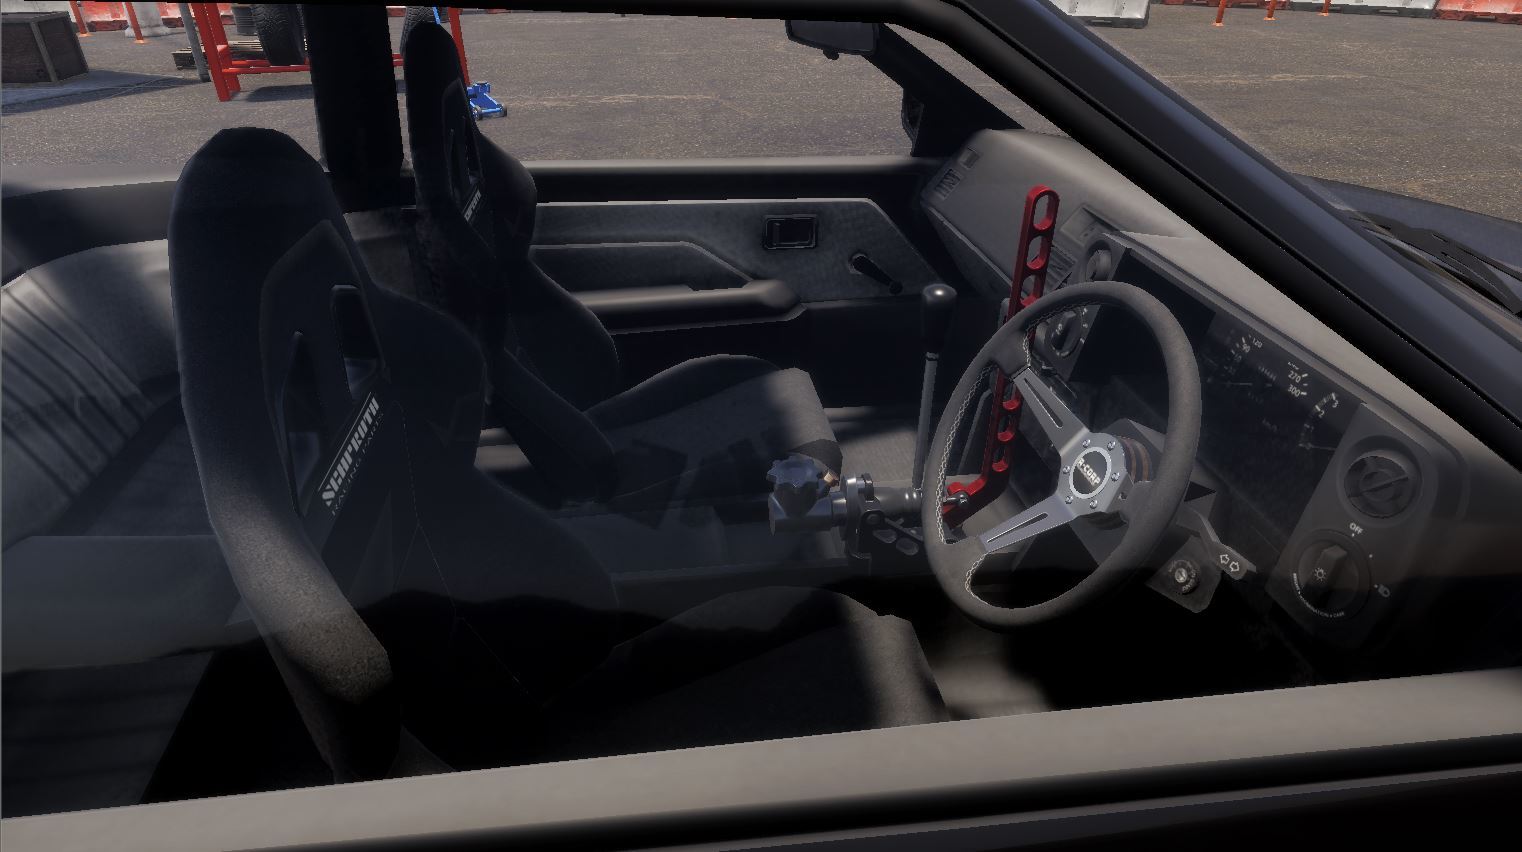 Steam Community Carx Drift Racing Online